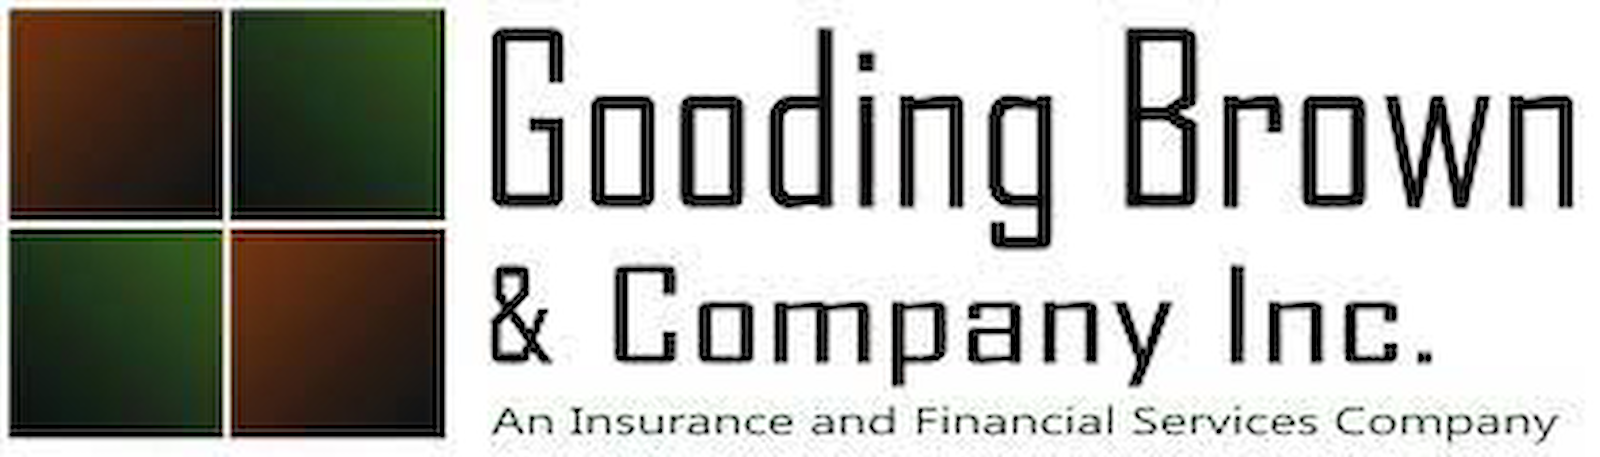 Gooding Brown & Company Inc.